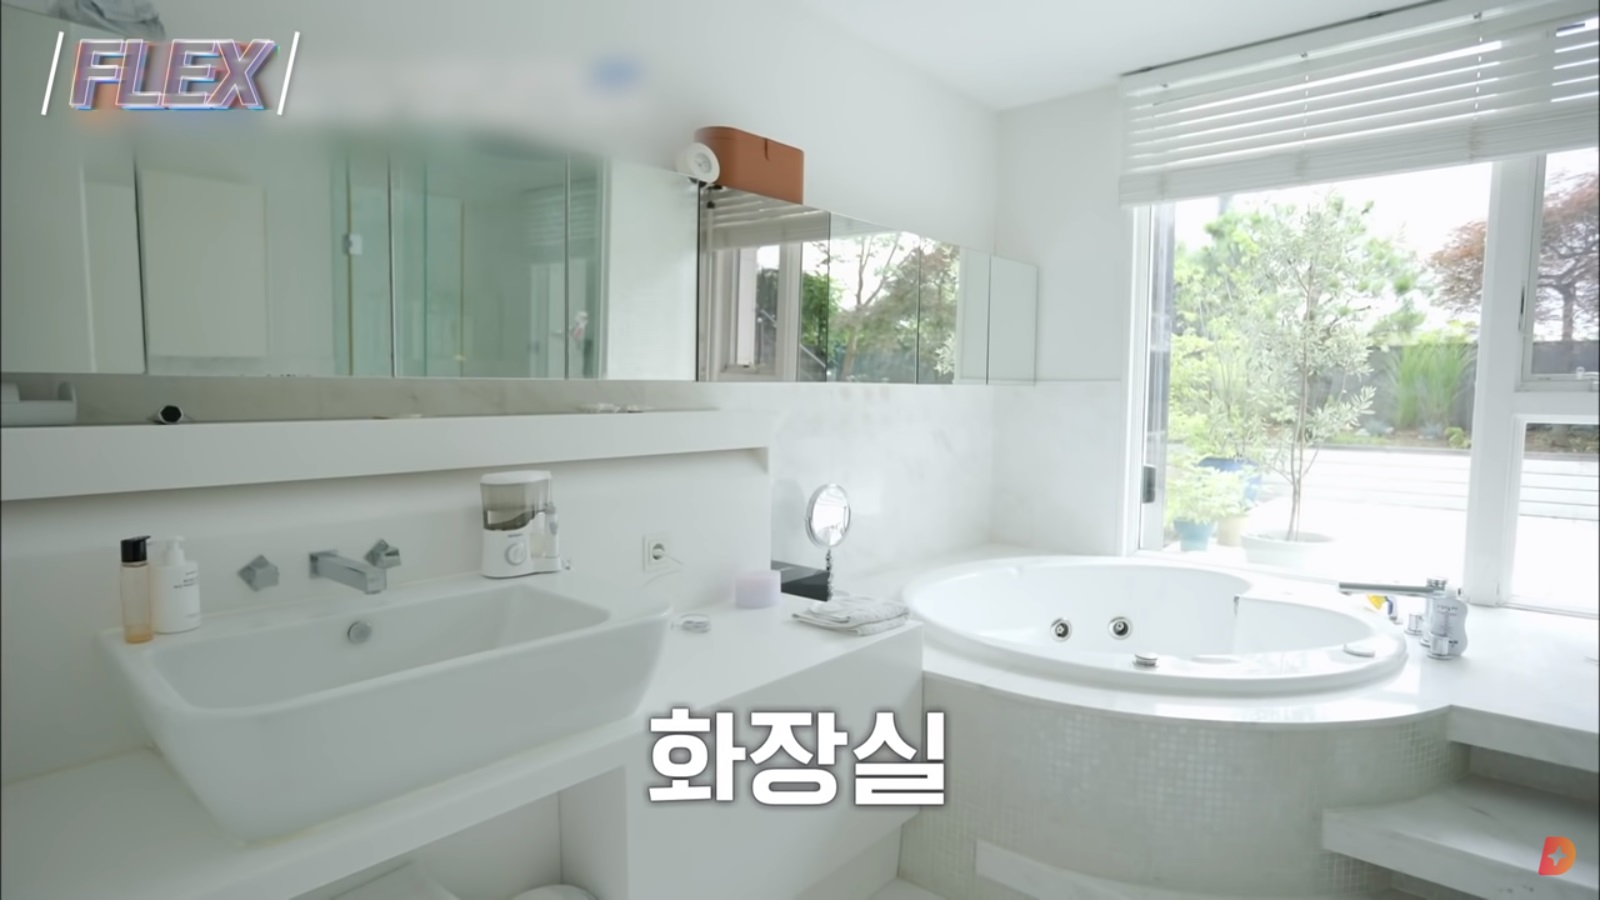 yuk mrapatdirumah sambil kepo rumah mewah artis korea 14